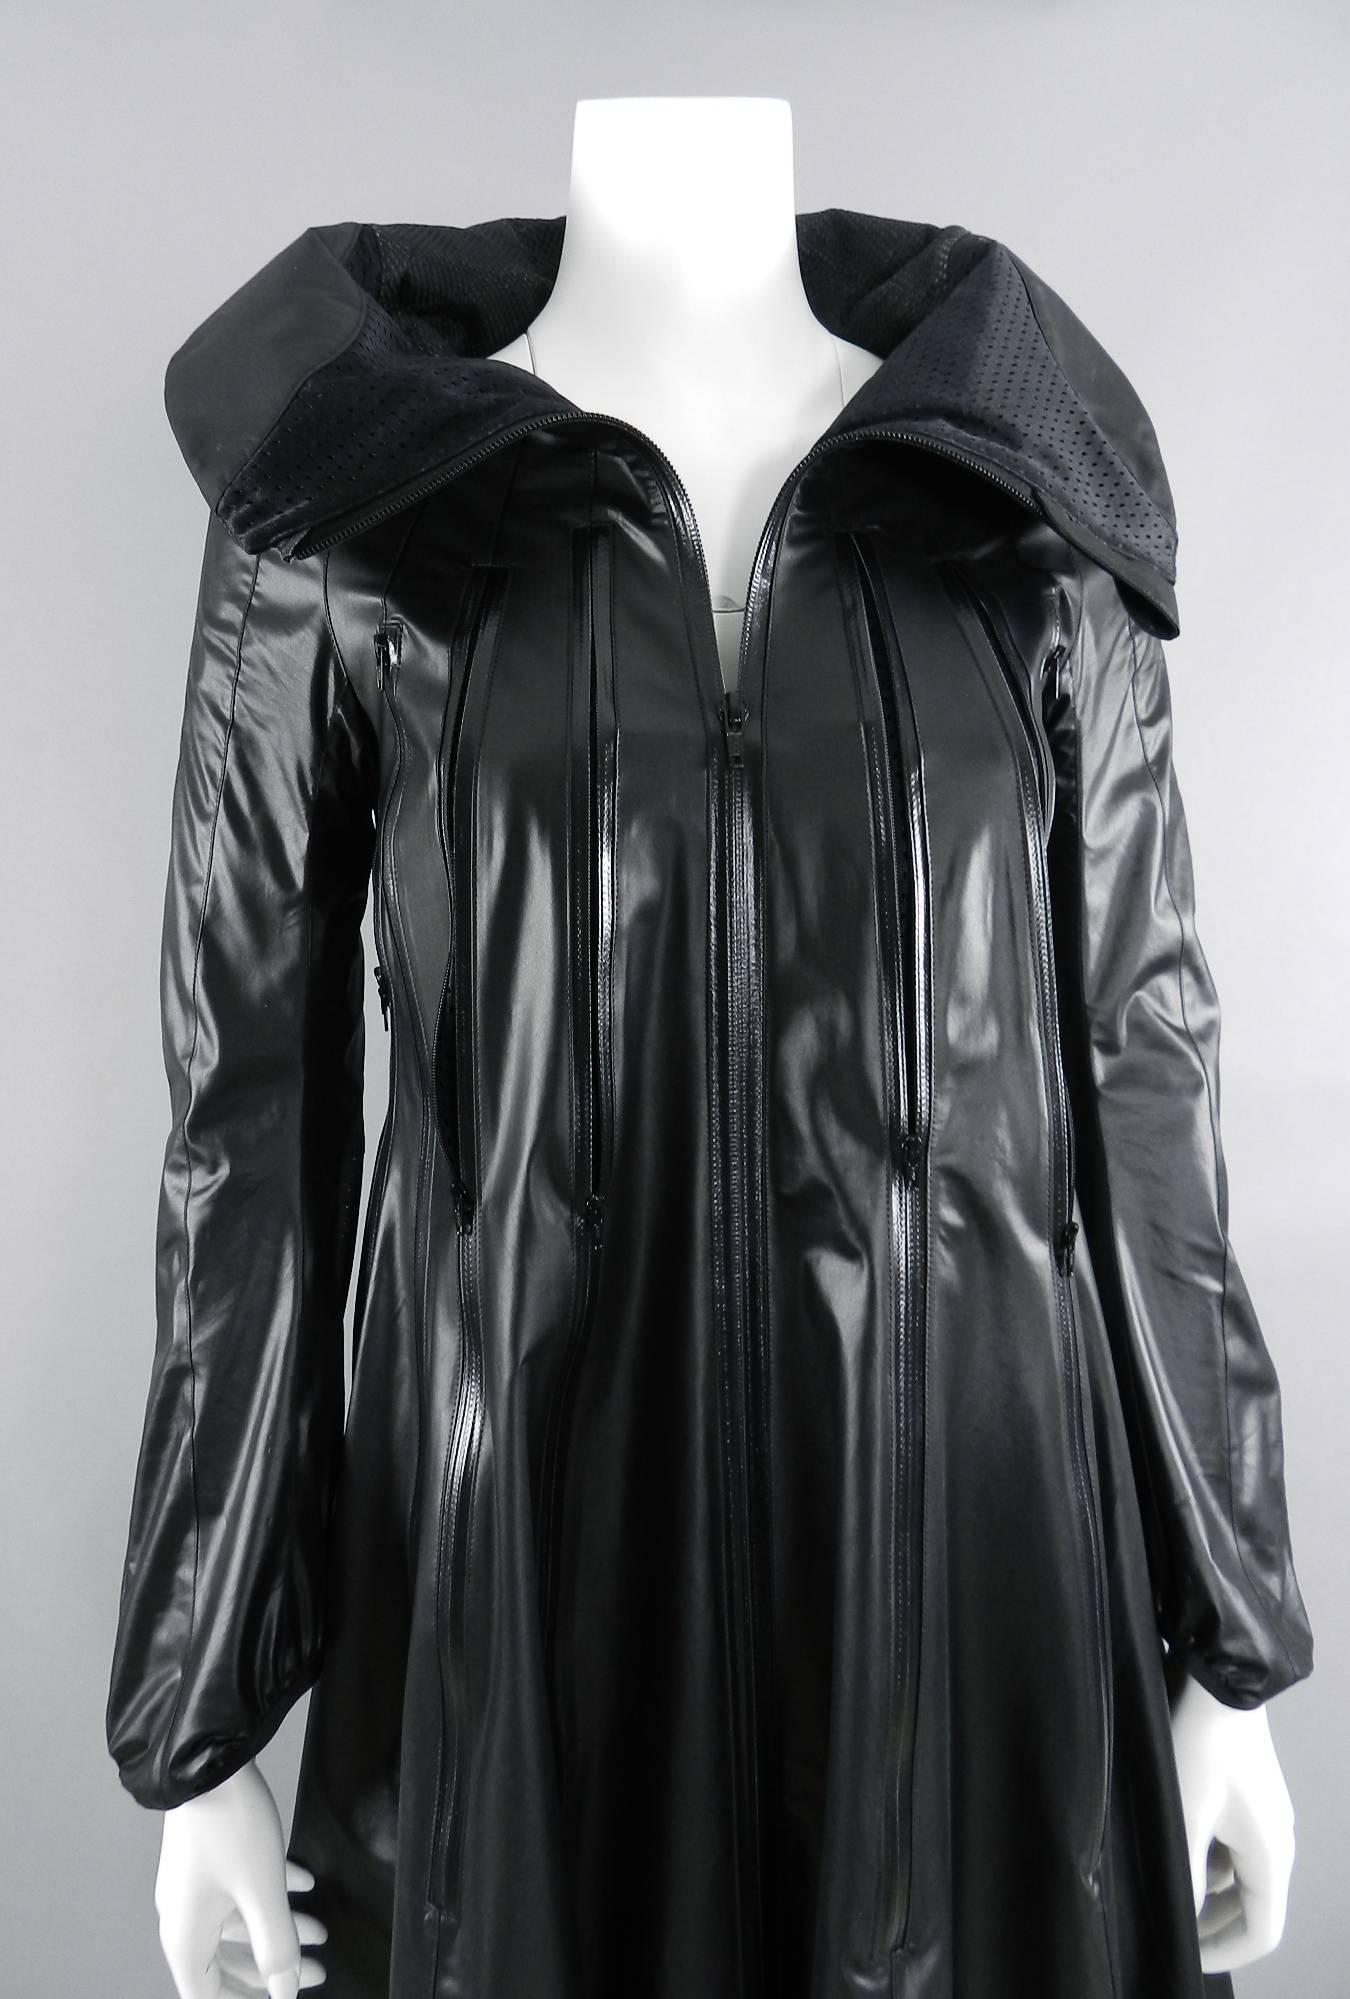 Junya Watanabe Comme des Garcons Spring 2013 Black Runway Nylon Zipper Coat 1